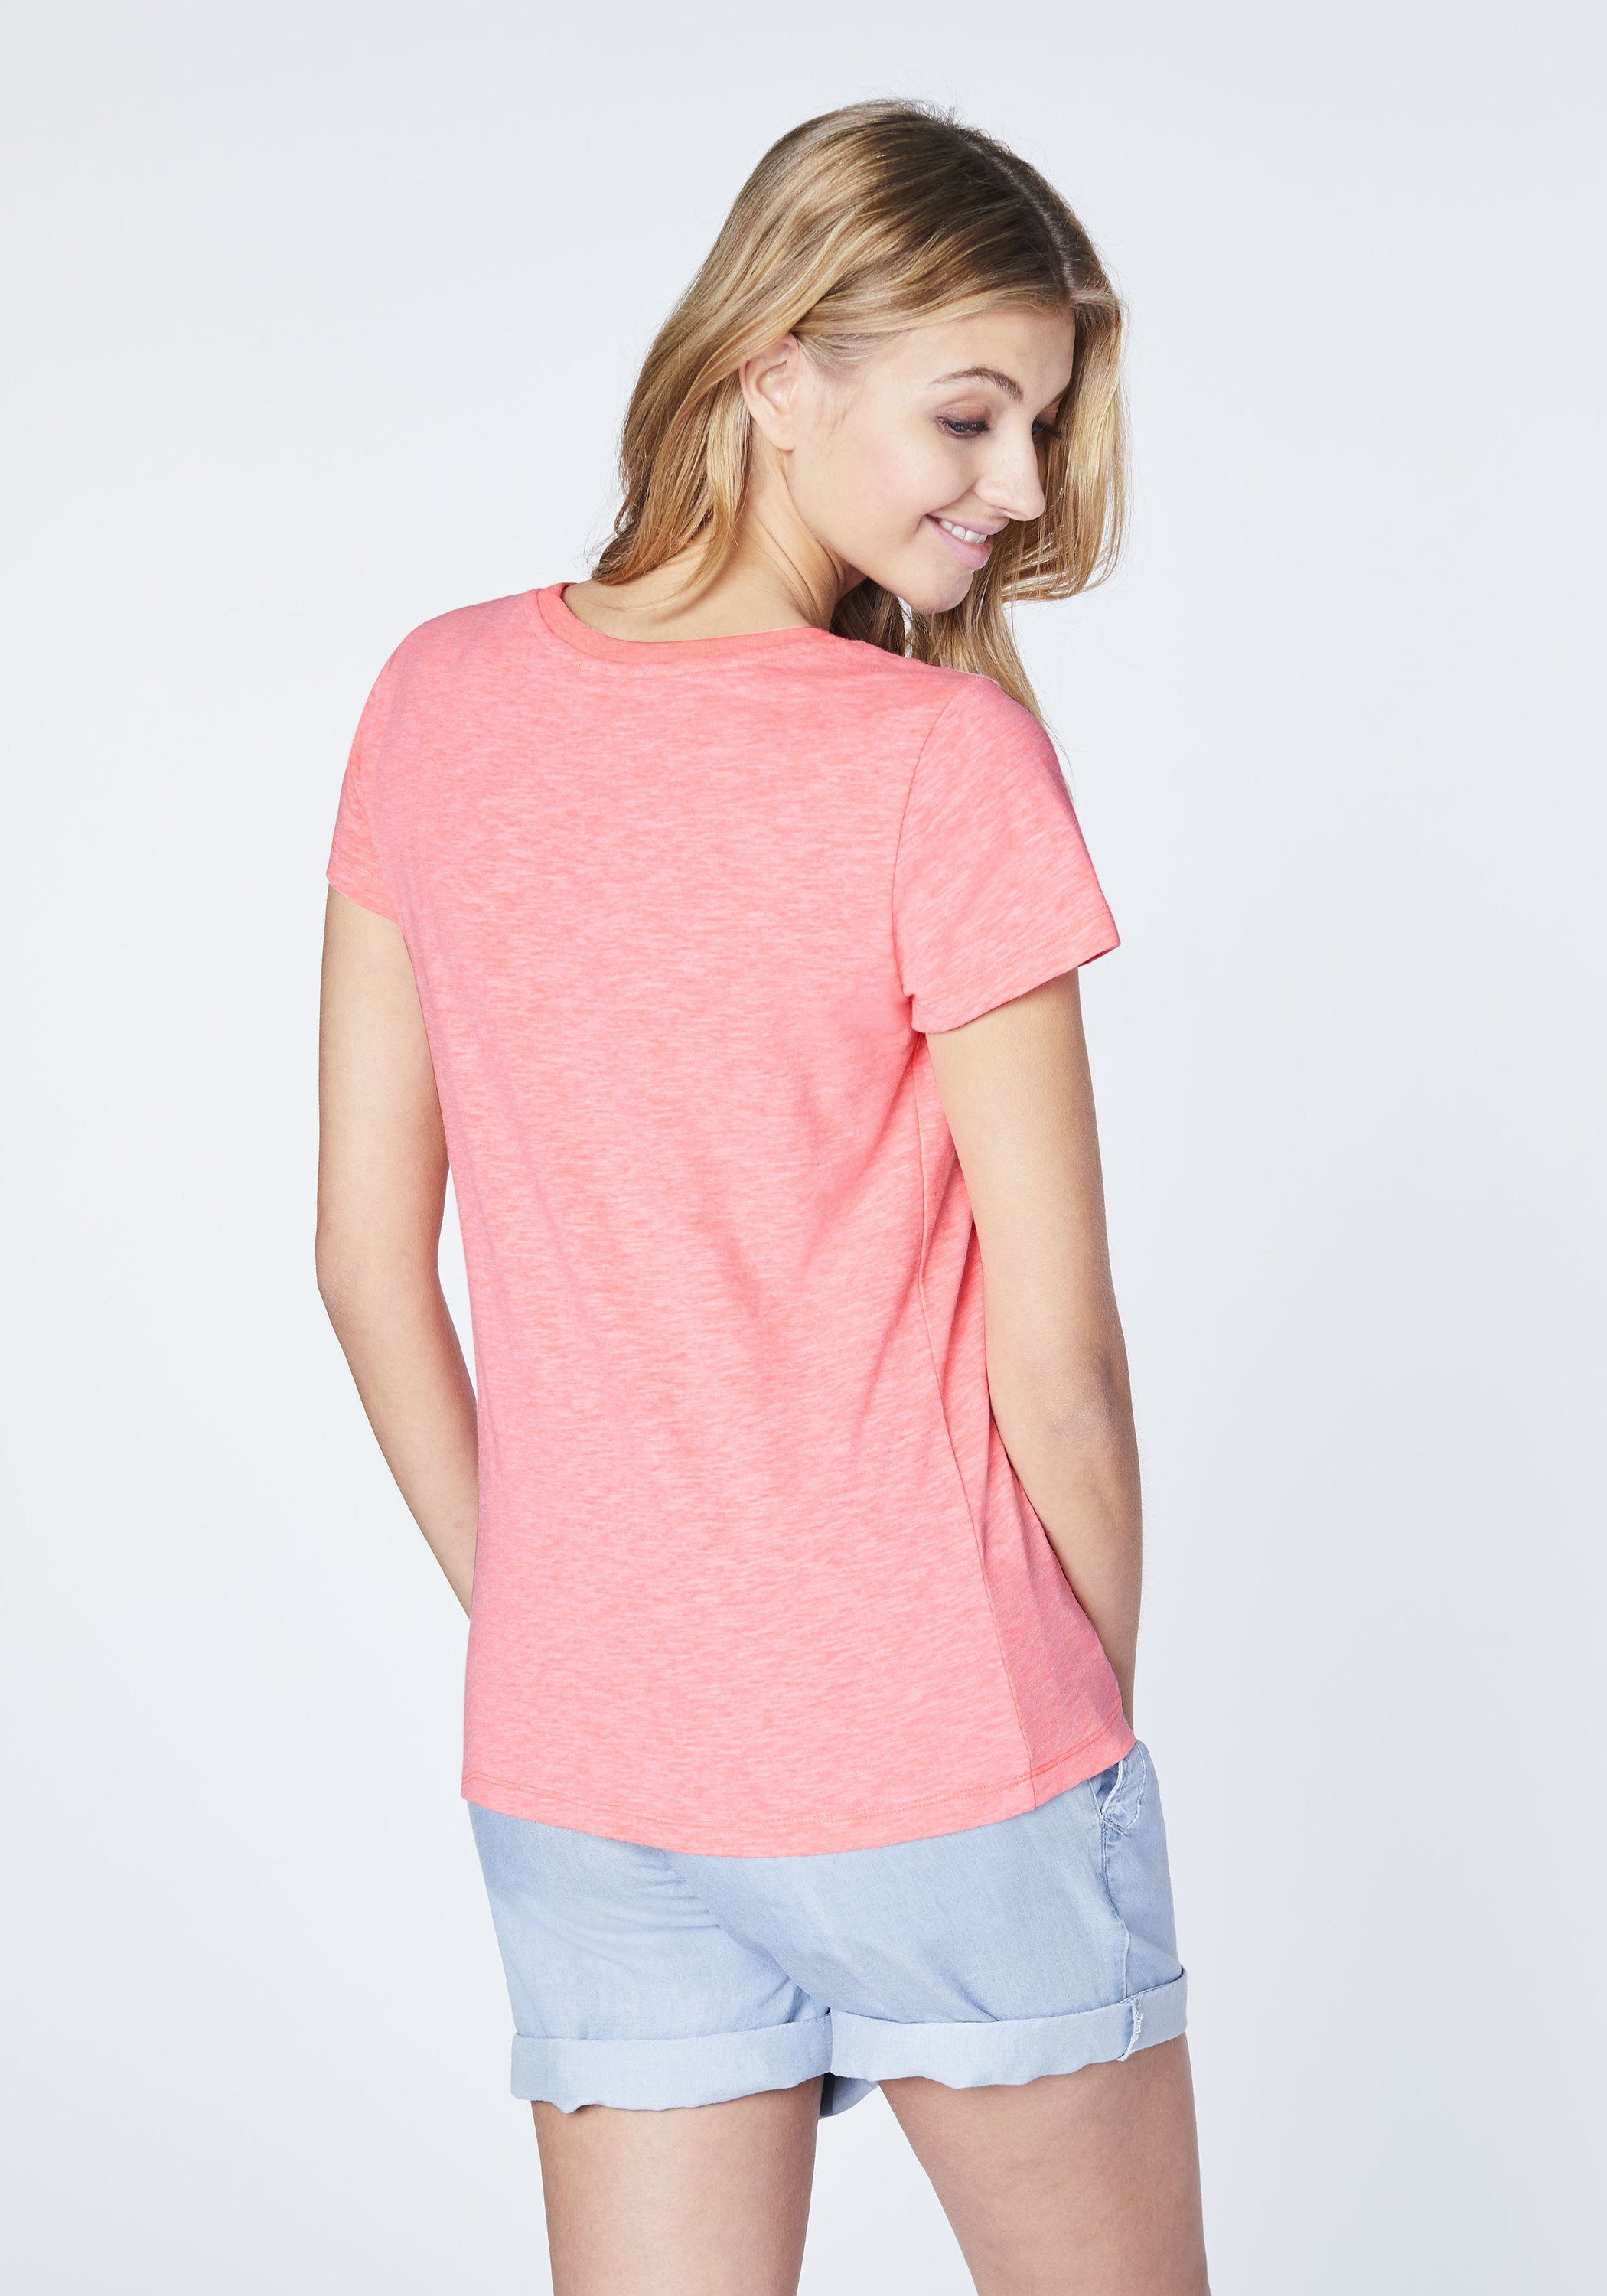 Pink mit Jumper-Frontprint Chiemsee T-Shirt Neon 1 Print-Shirt